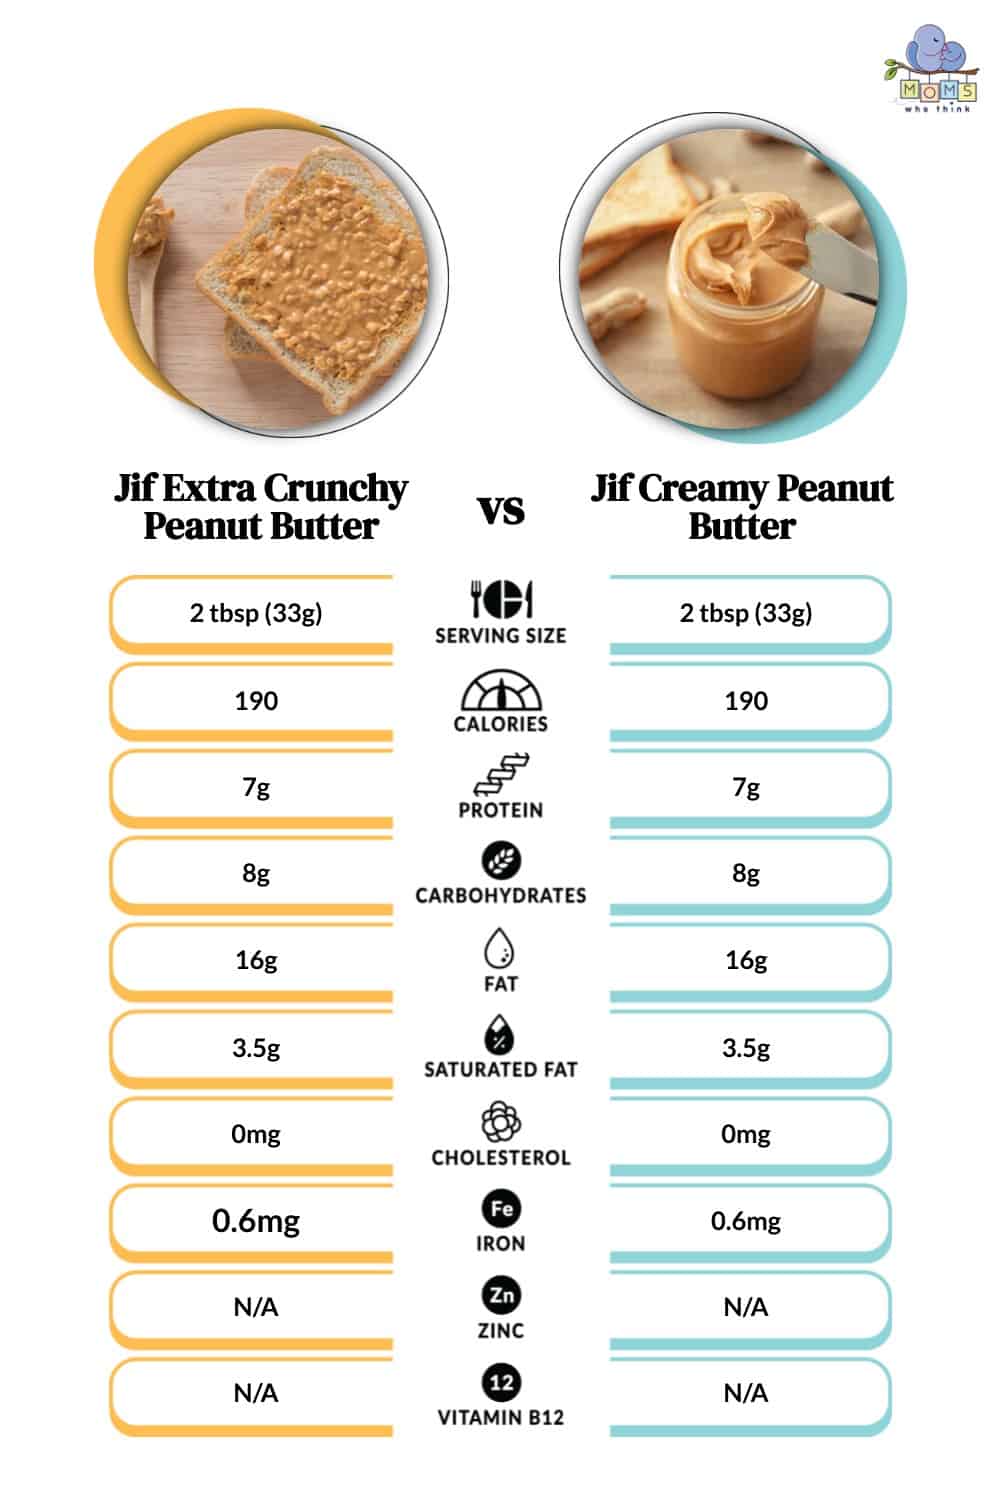 Jif Extra Crunchy Peanut Butter vs Jif Creamy Peanut Butter Nutrition Comparison